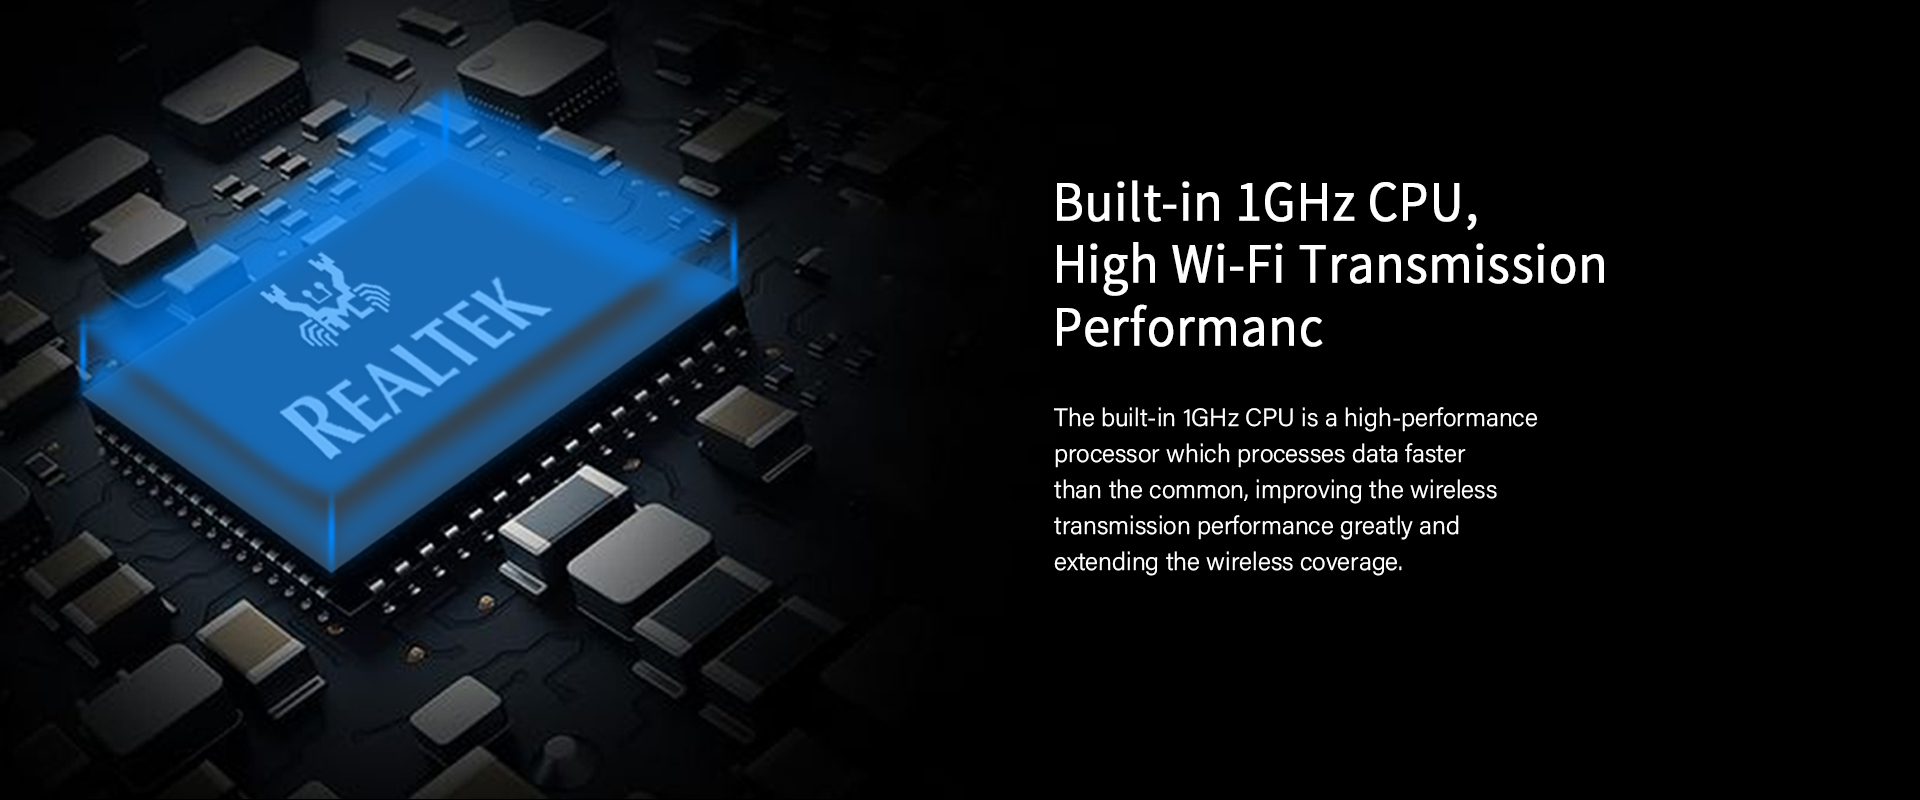 high Wi-Fi transmission performance 